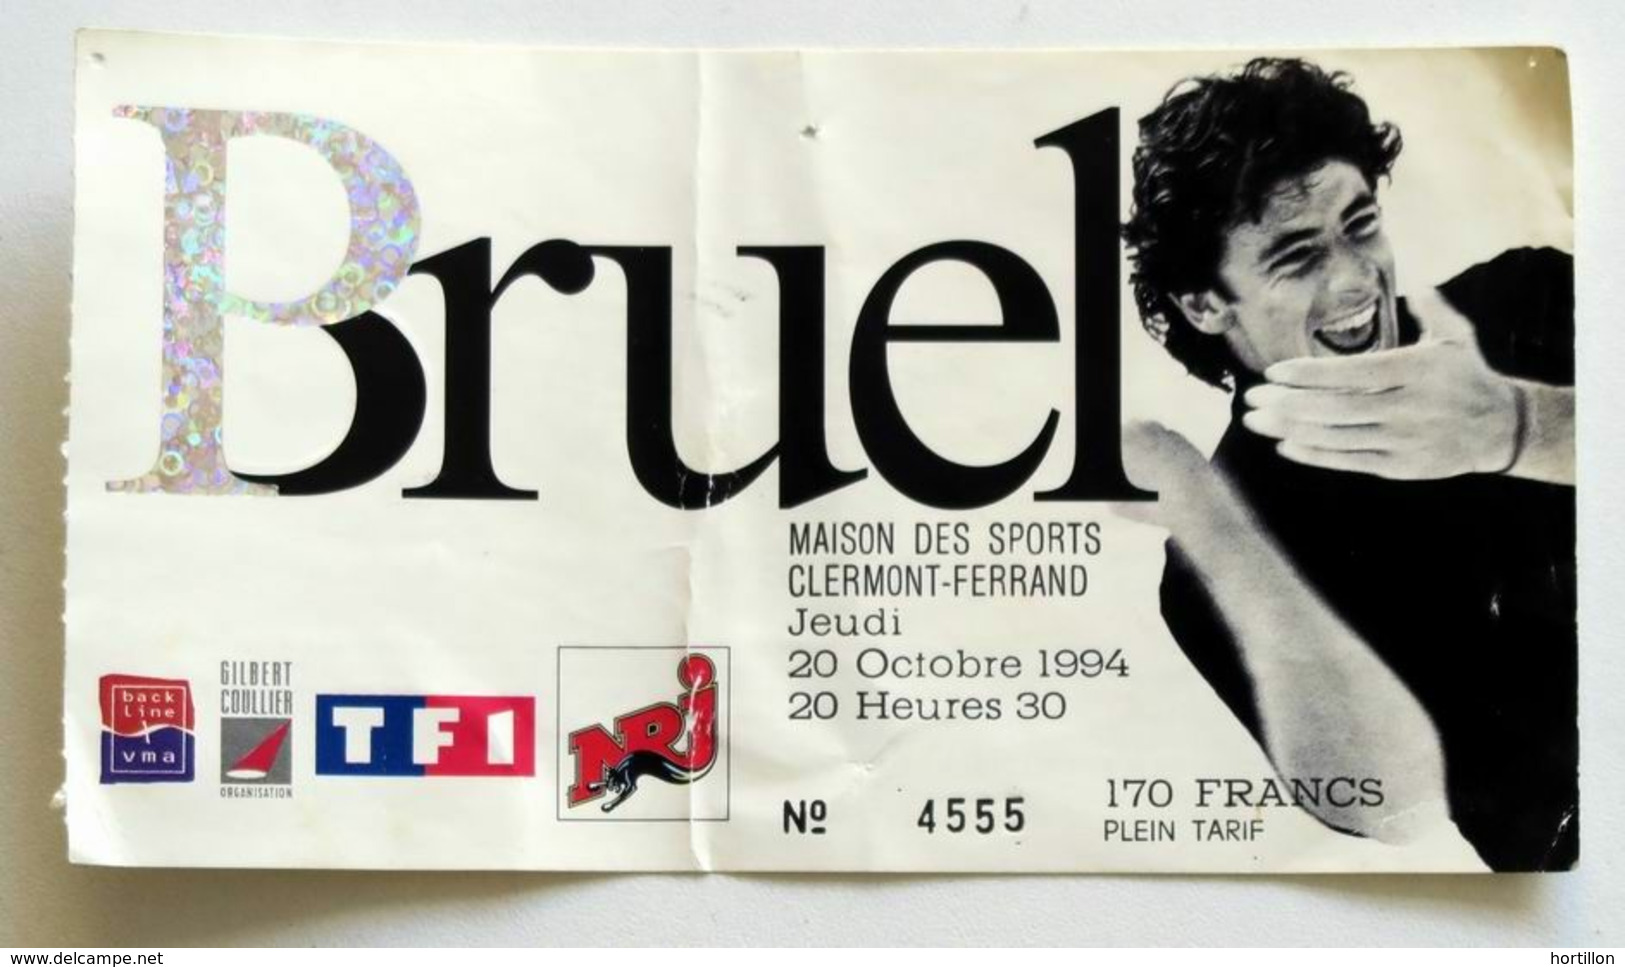 PATRICK BRUEL Billet Concert Collector Ticket CLERMONT-FERRAND 20 OCTOBRE 1994 - Concert Tickets